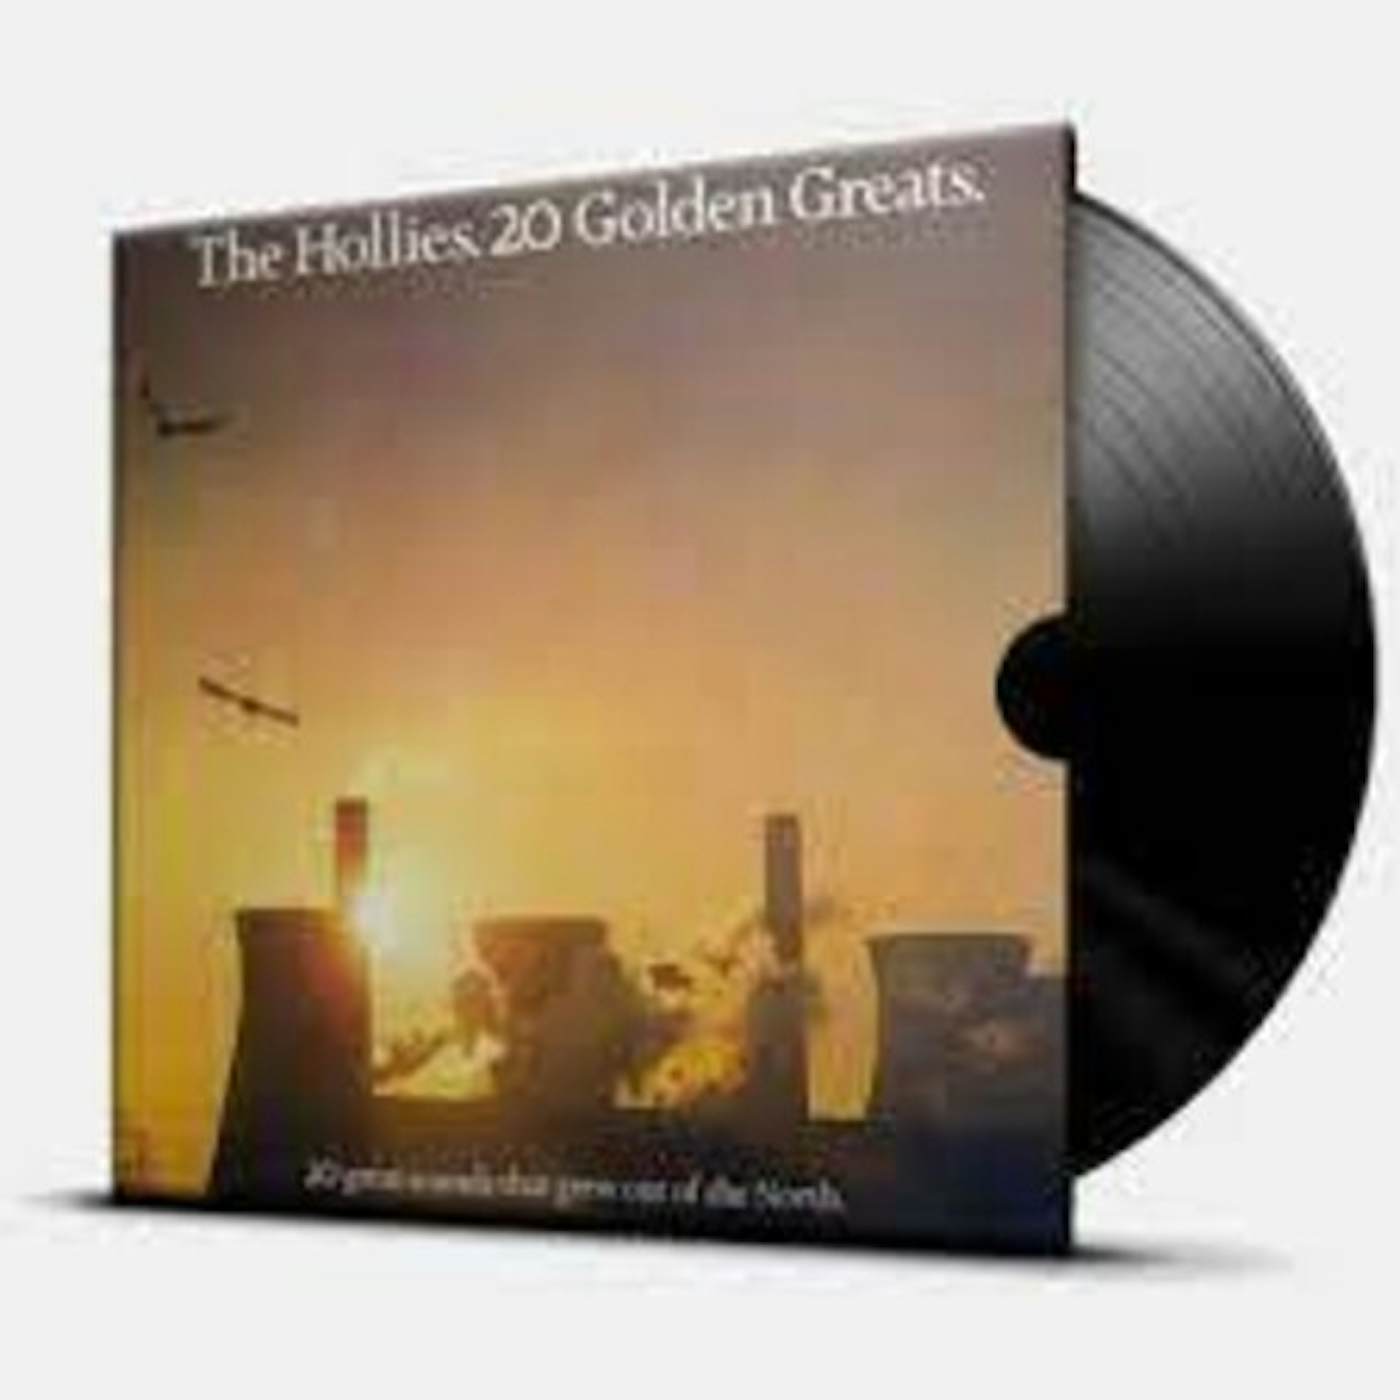 The Hollies 20 Golden Greats Vinyl Record